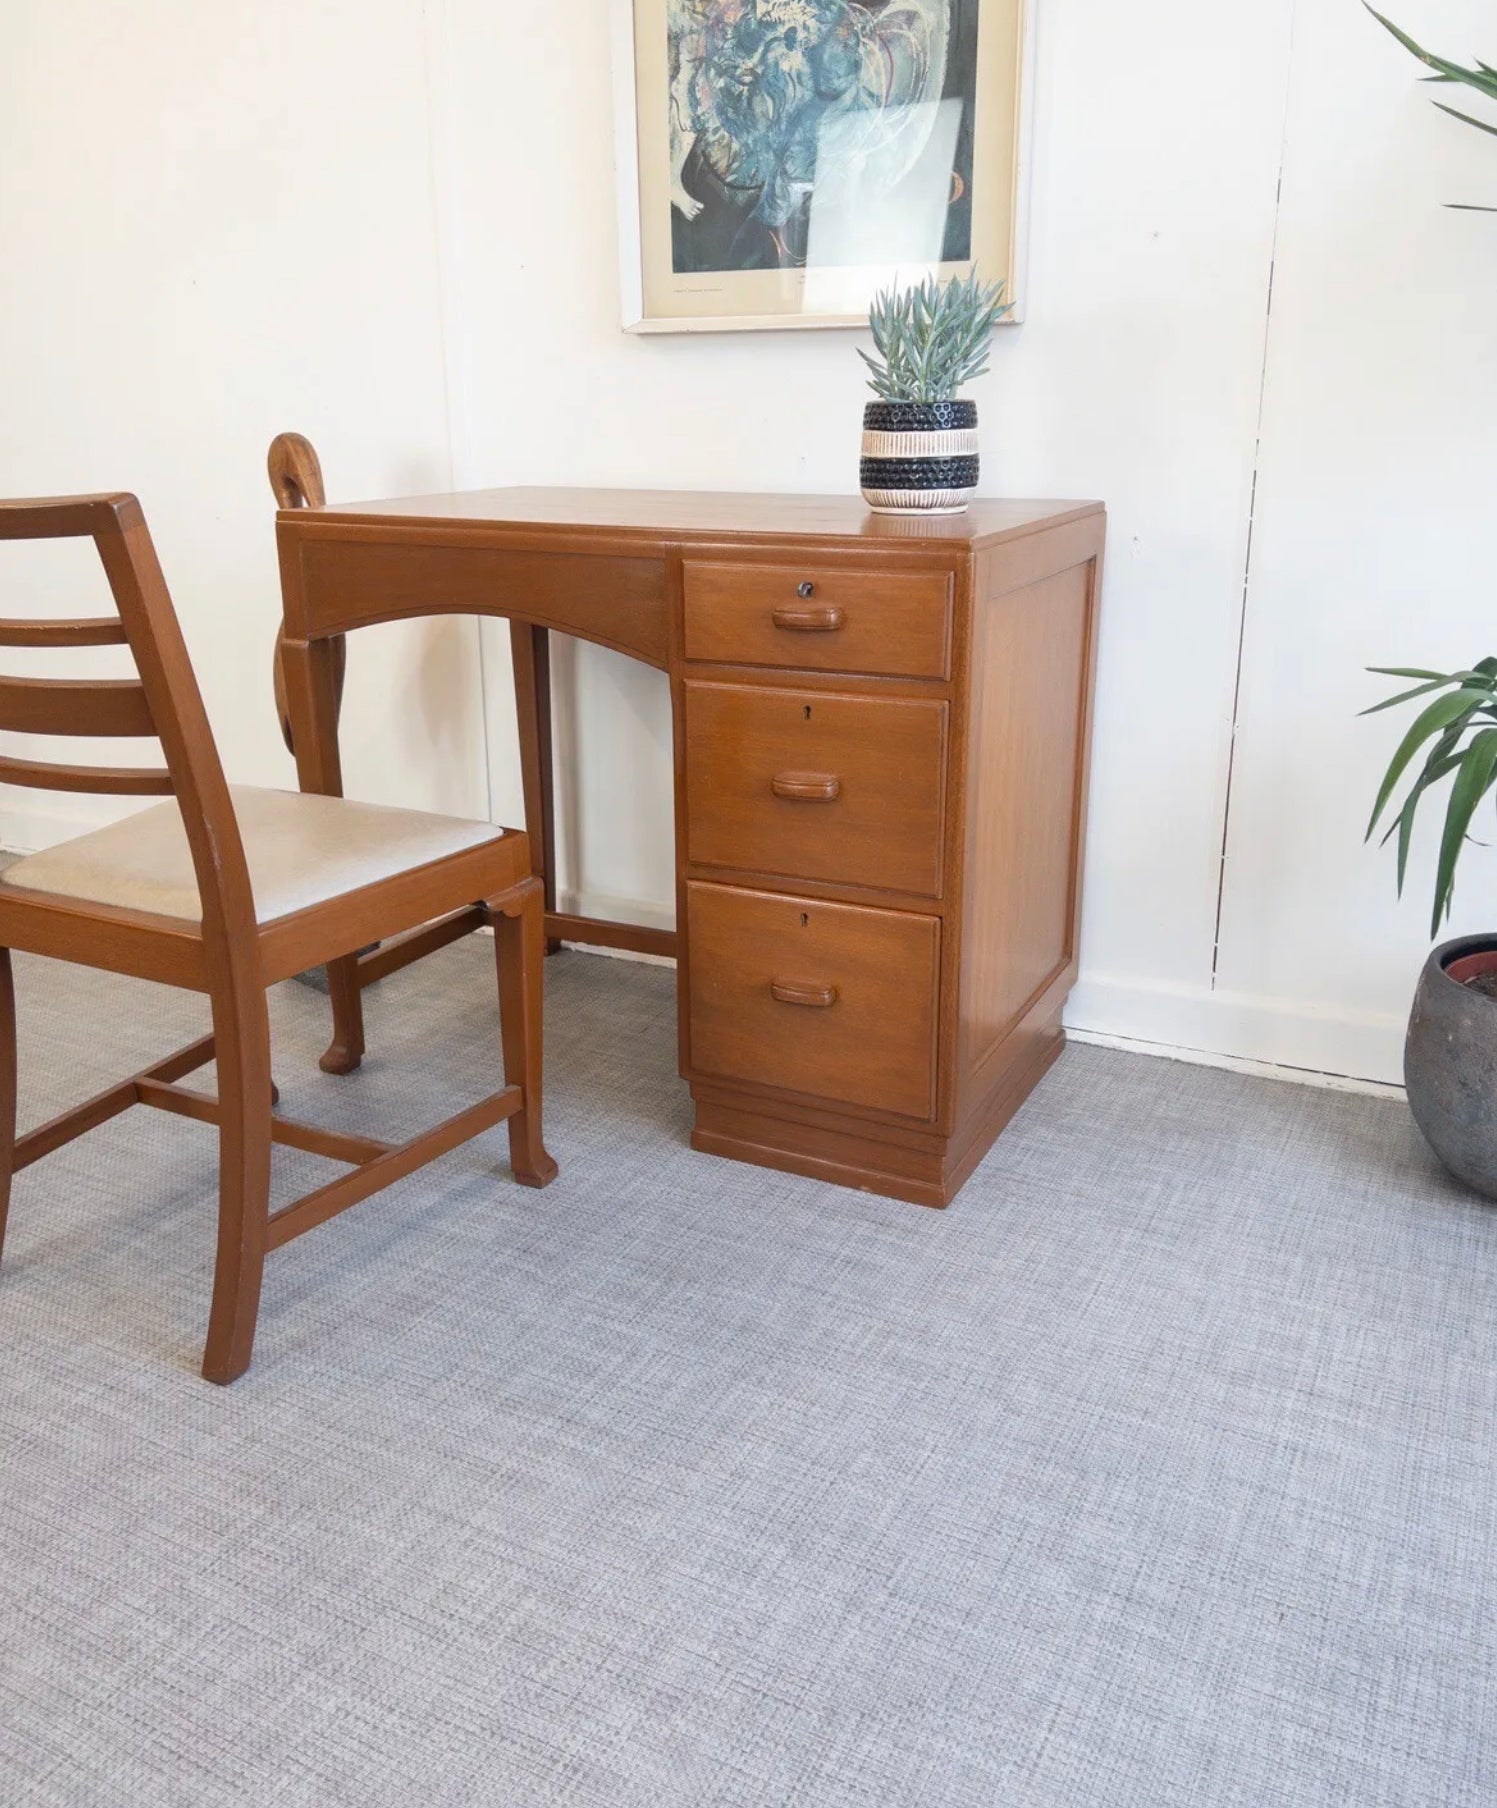 Vintage Compact Desk American Made Home Office Retro Furniture - teakyfinders